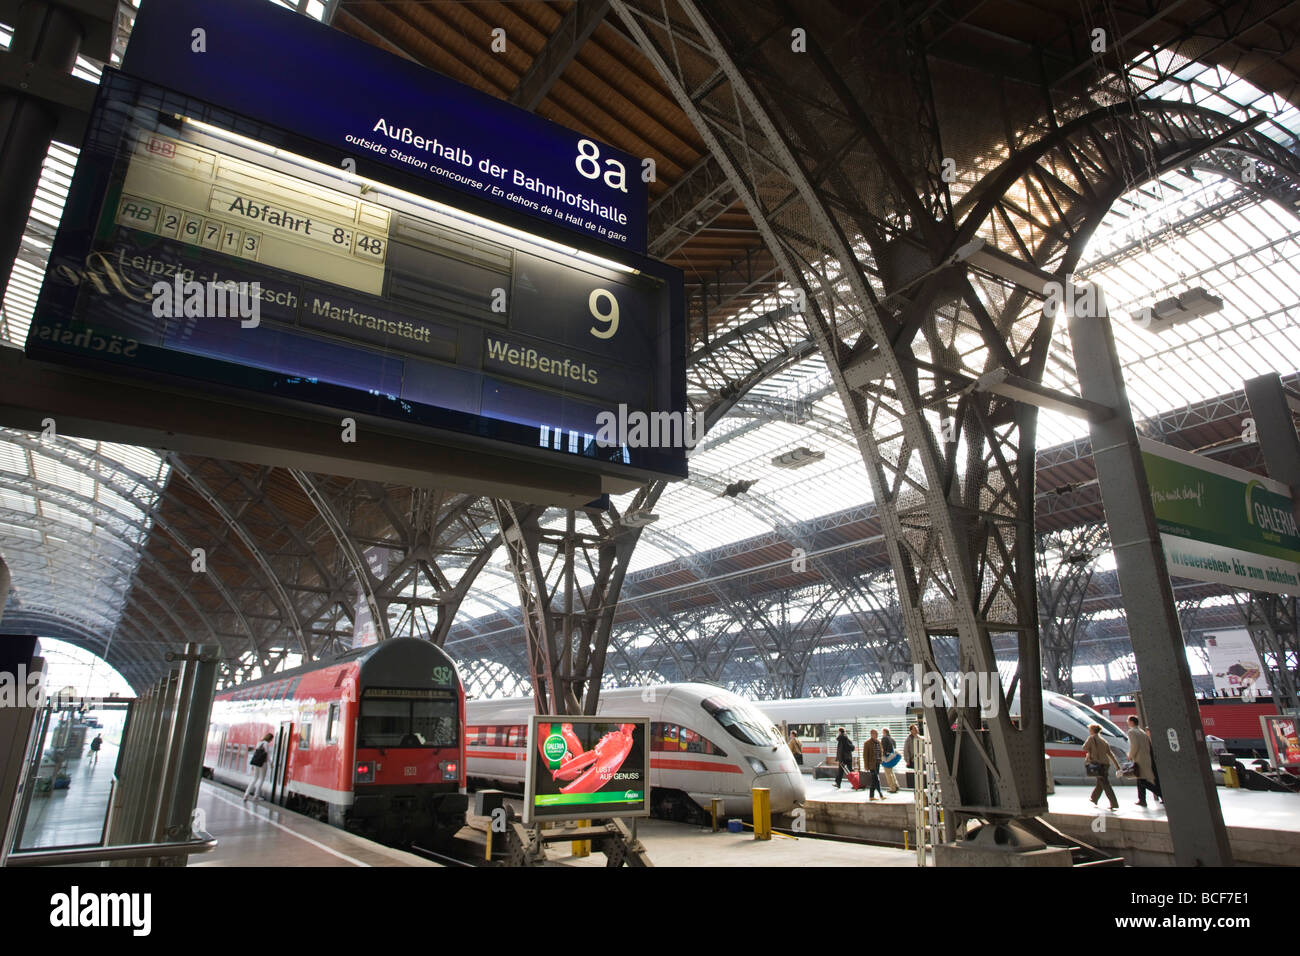 Germany, Saxony, Leipzig, Main Train Station, Train schedule Stock ...